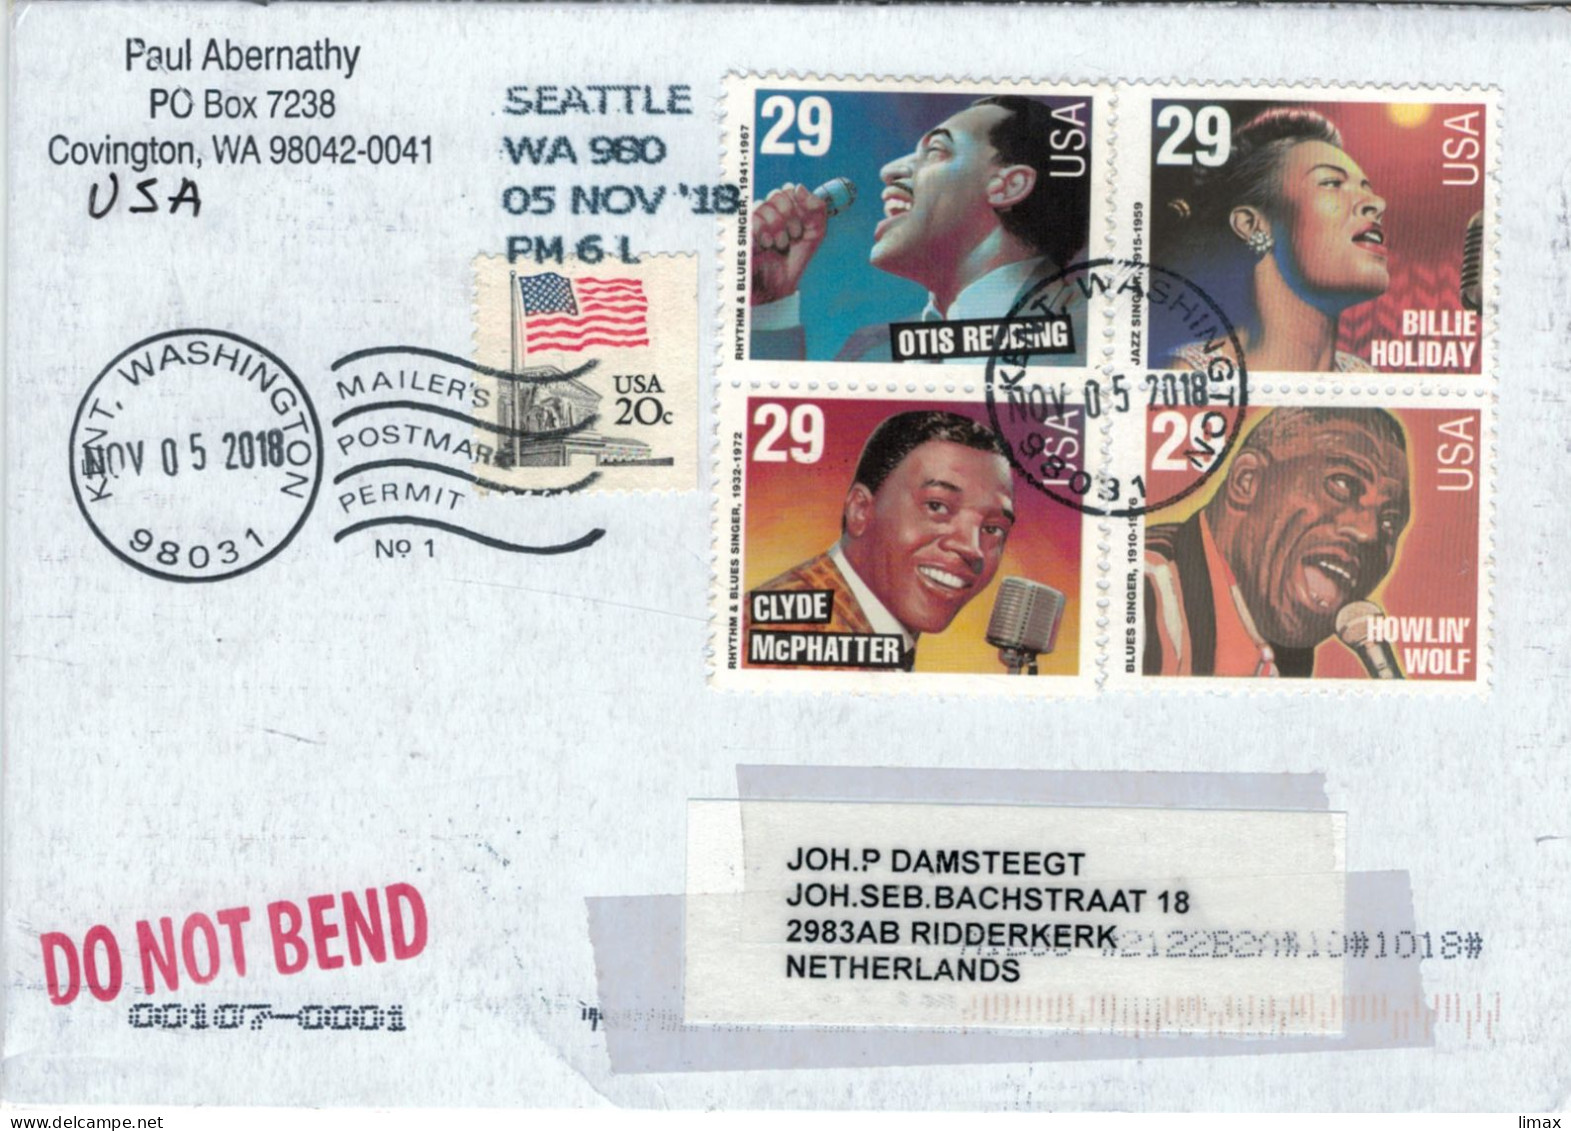 98031 Kent Washington 2018 Ottis Redding - Billie Holiday - Clyde McPhatter - Howlin' Wolf - Musik - Mailers Postmark - Covers & Documents